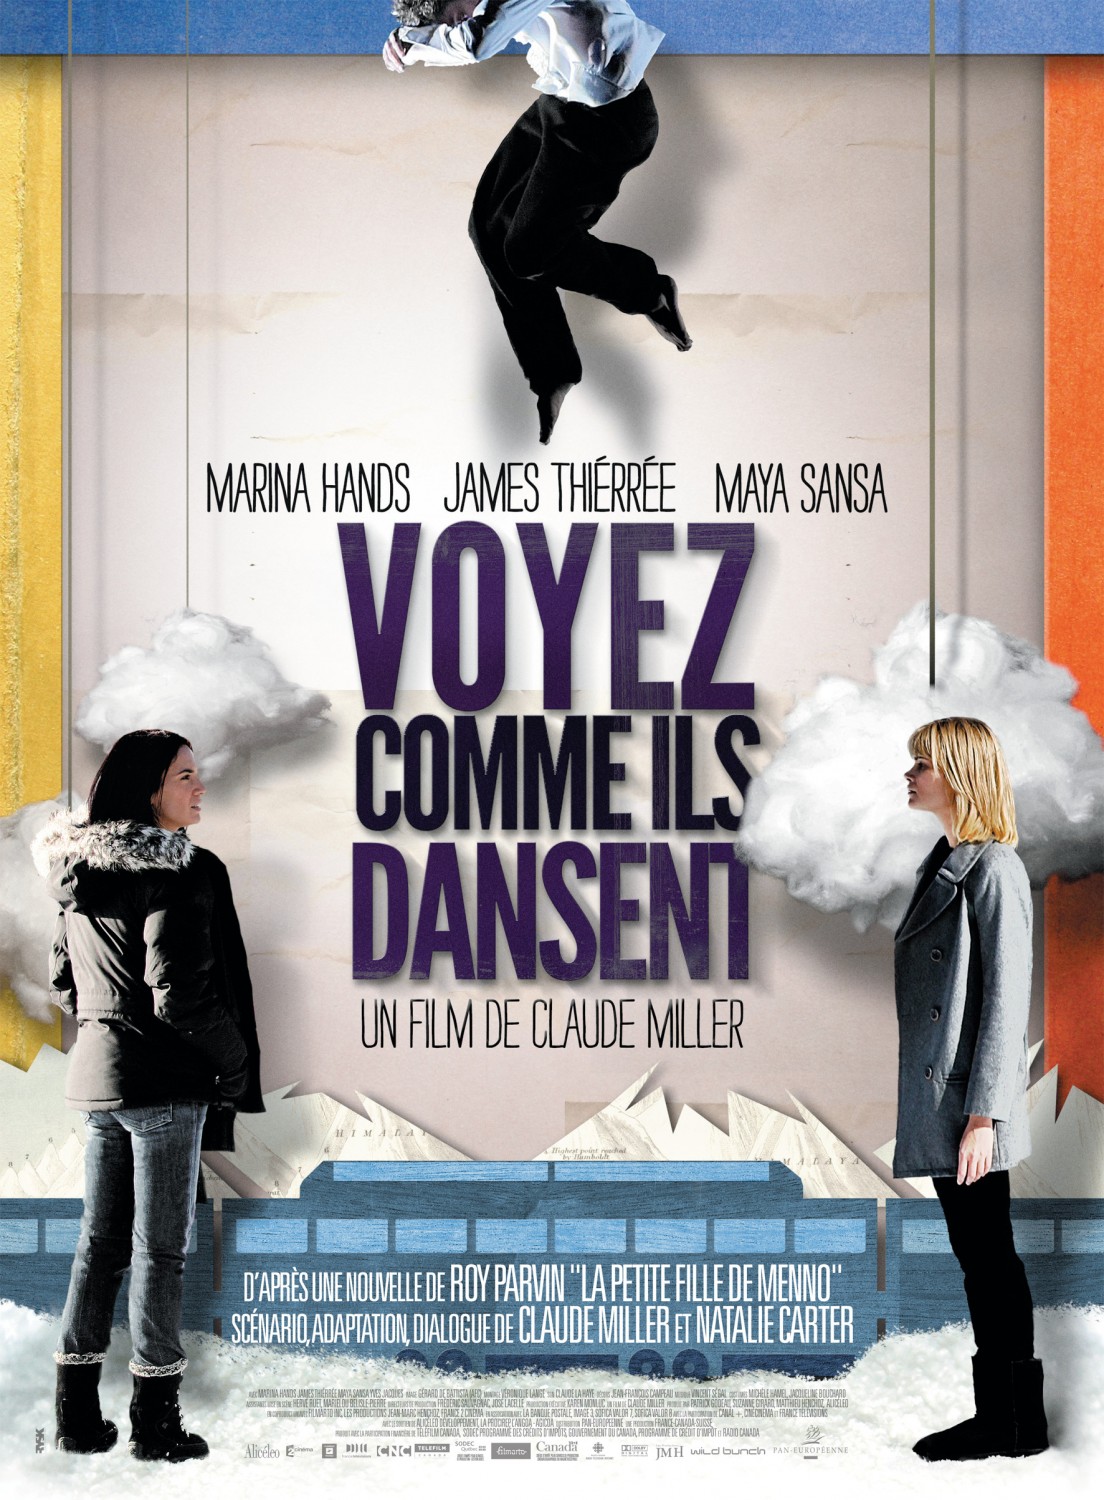 Extra Large Movie Poster Image for Voyez comme ils dansent (#2 of 2)